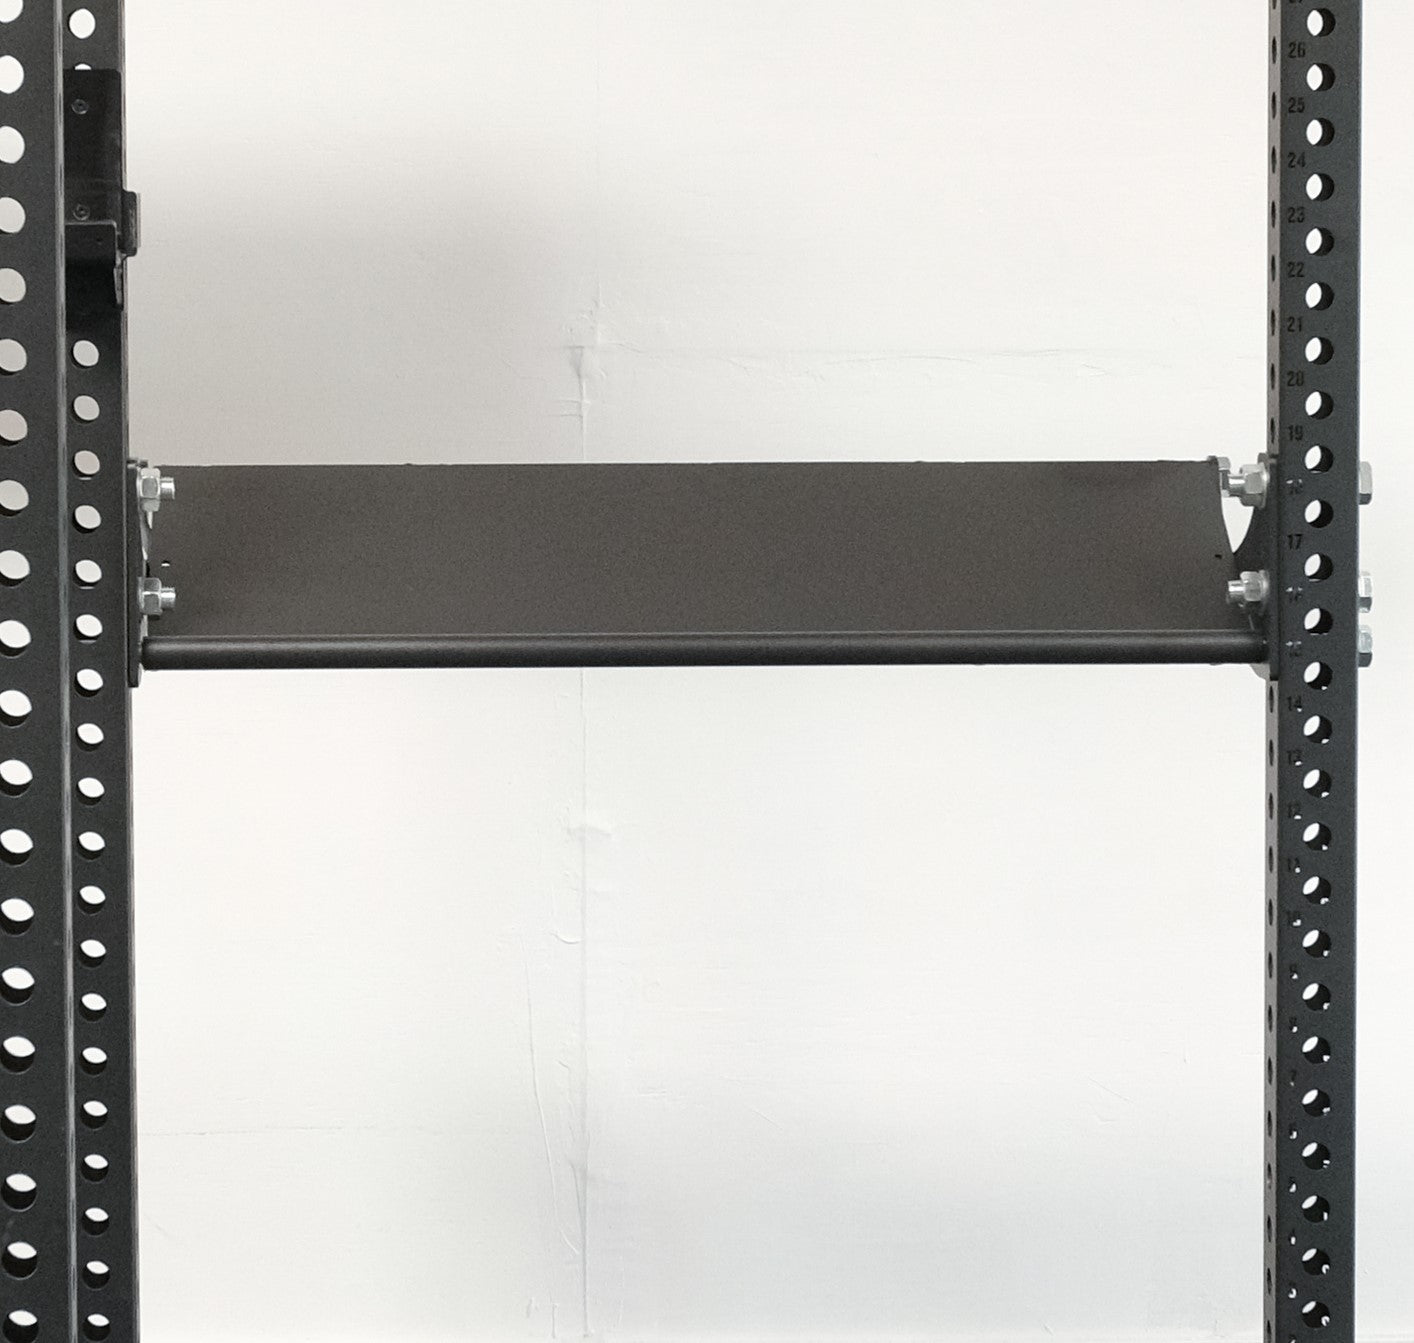 3x3 Fringe Sport Rack Storage Shelf